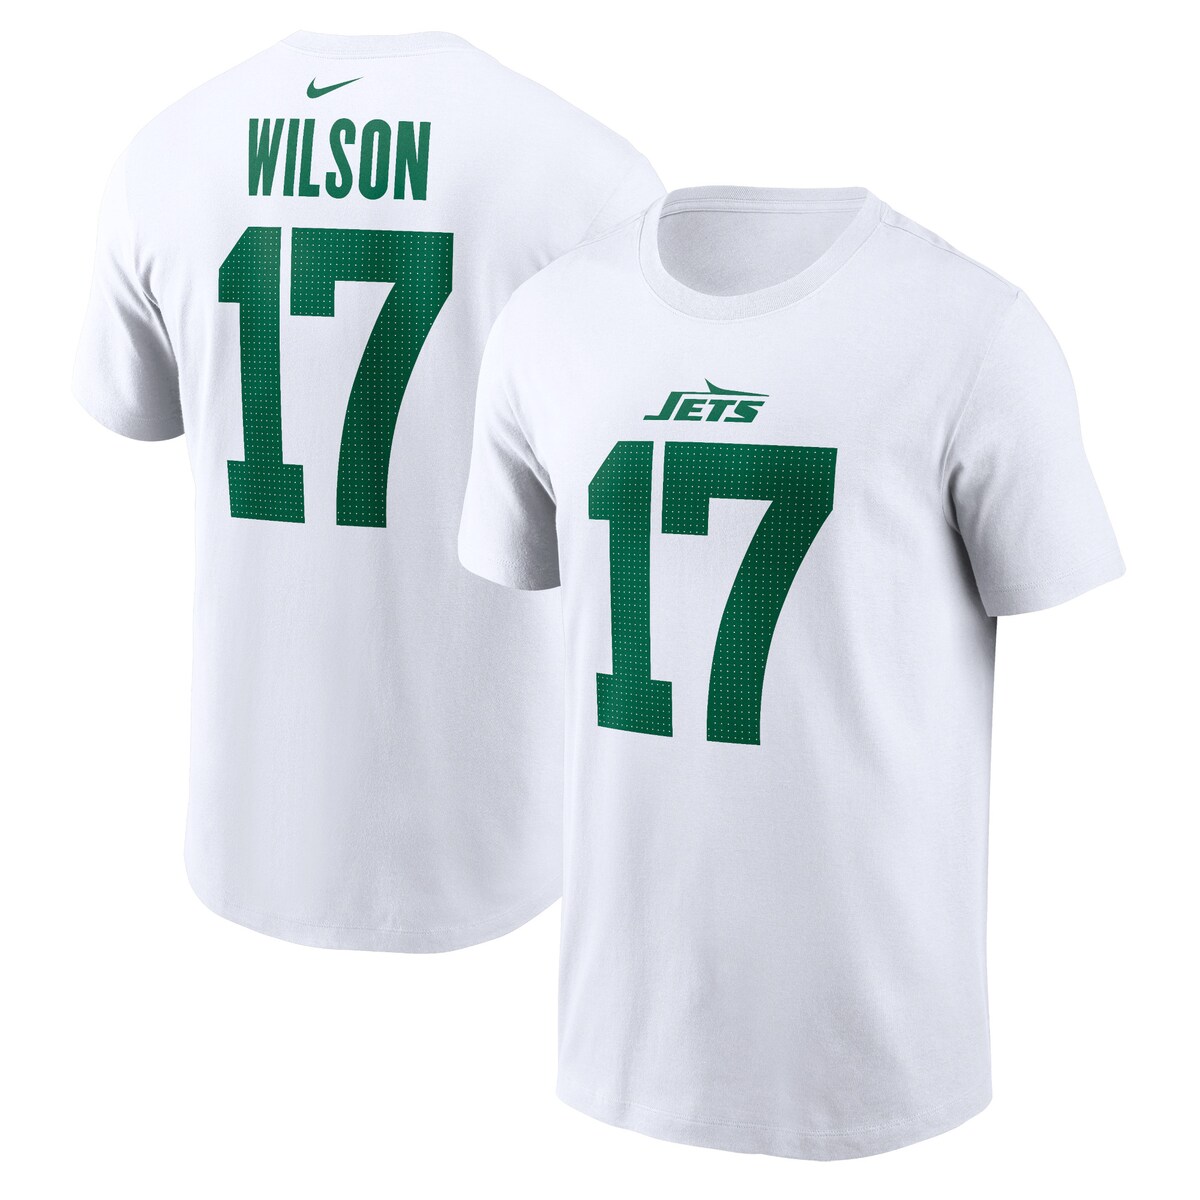 NFL ジェッツ ギャレット・ウィルソン ネーム&ナンバー Tシャツ Nike ナイキ メンズ ホワイト (23 Men's Nike Player N&N SST)